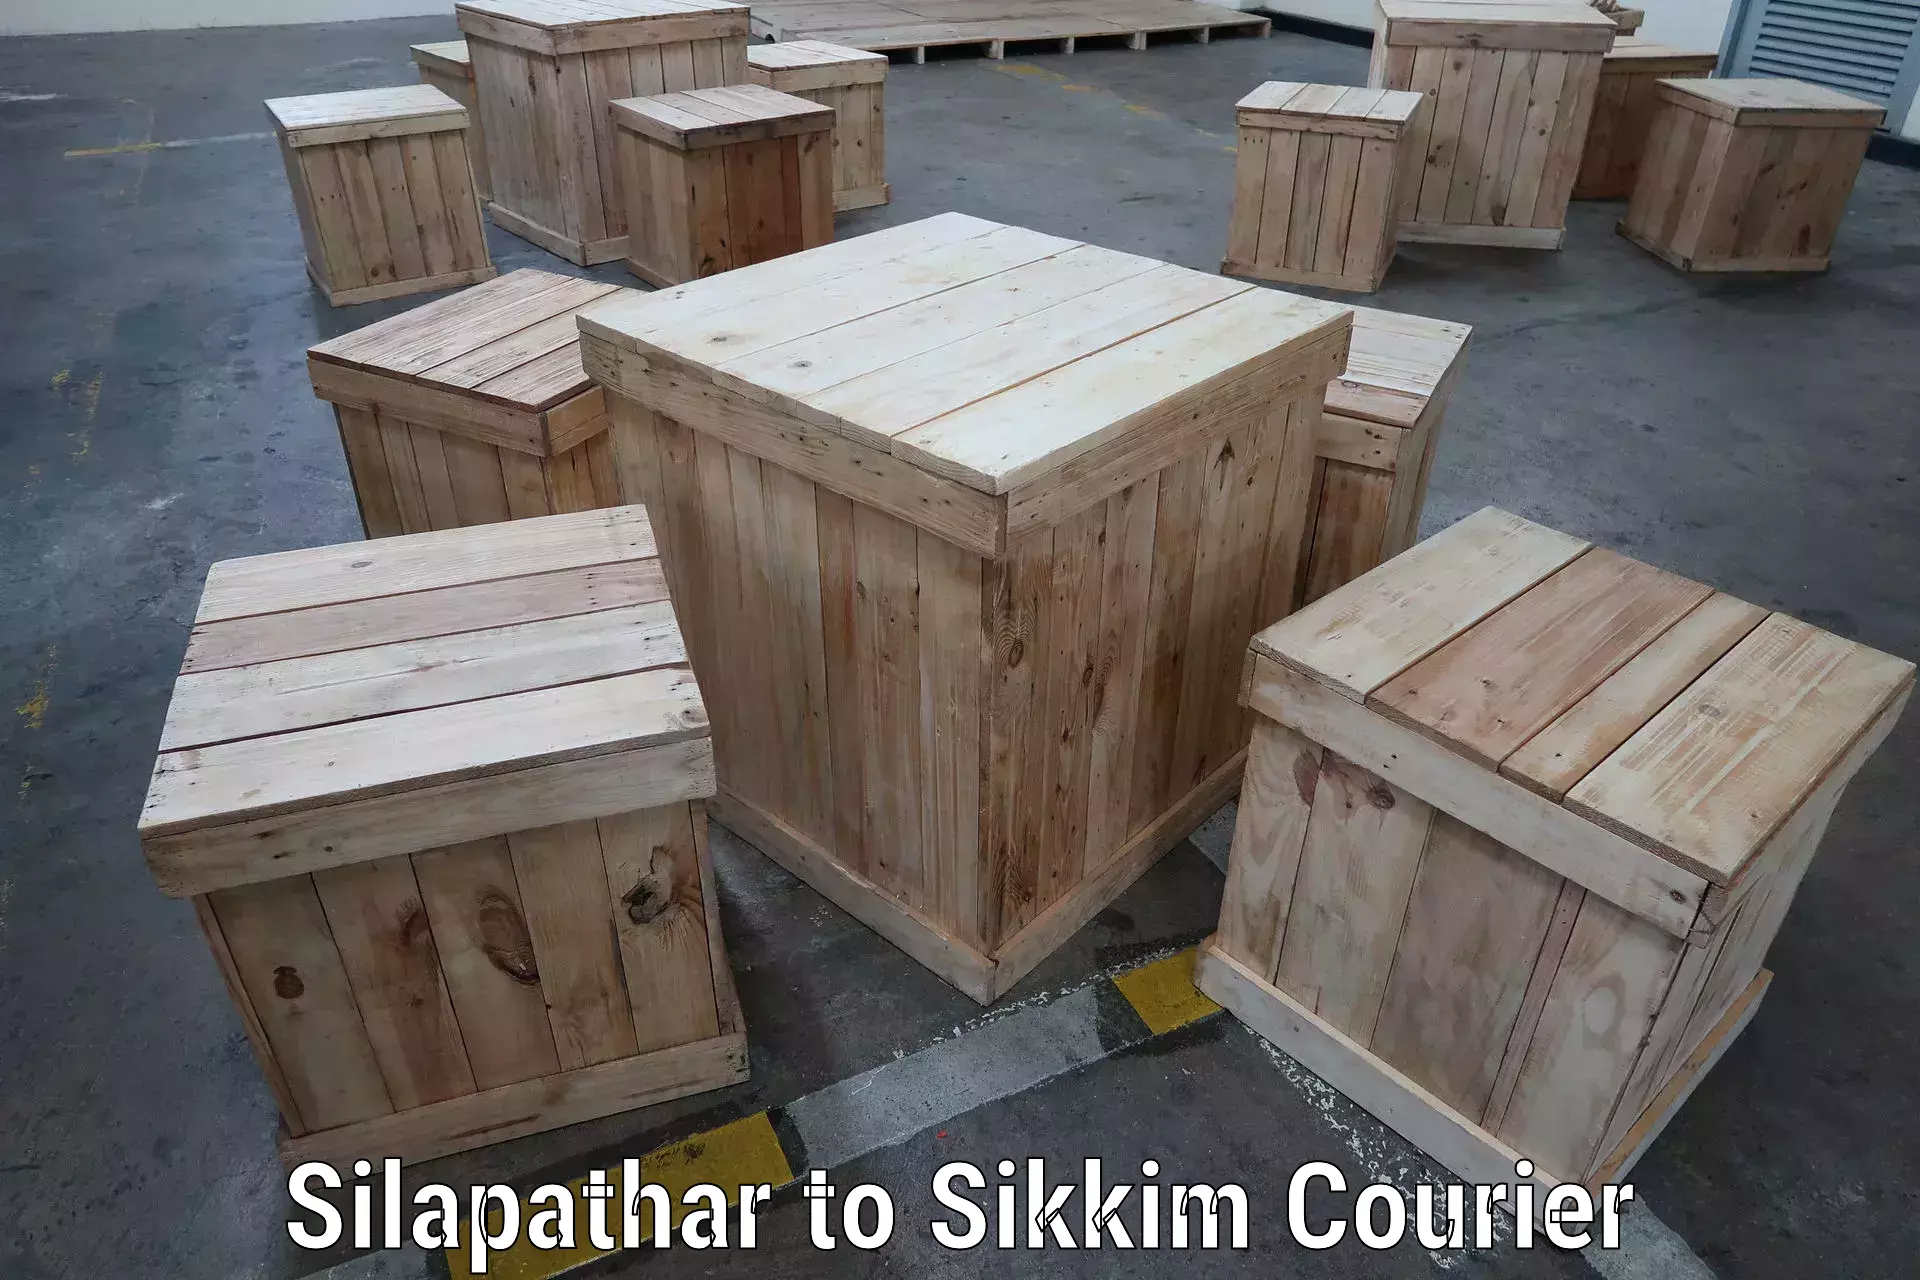 High-performance logistics Silapathar to Sikkim